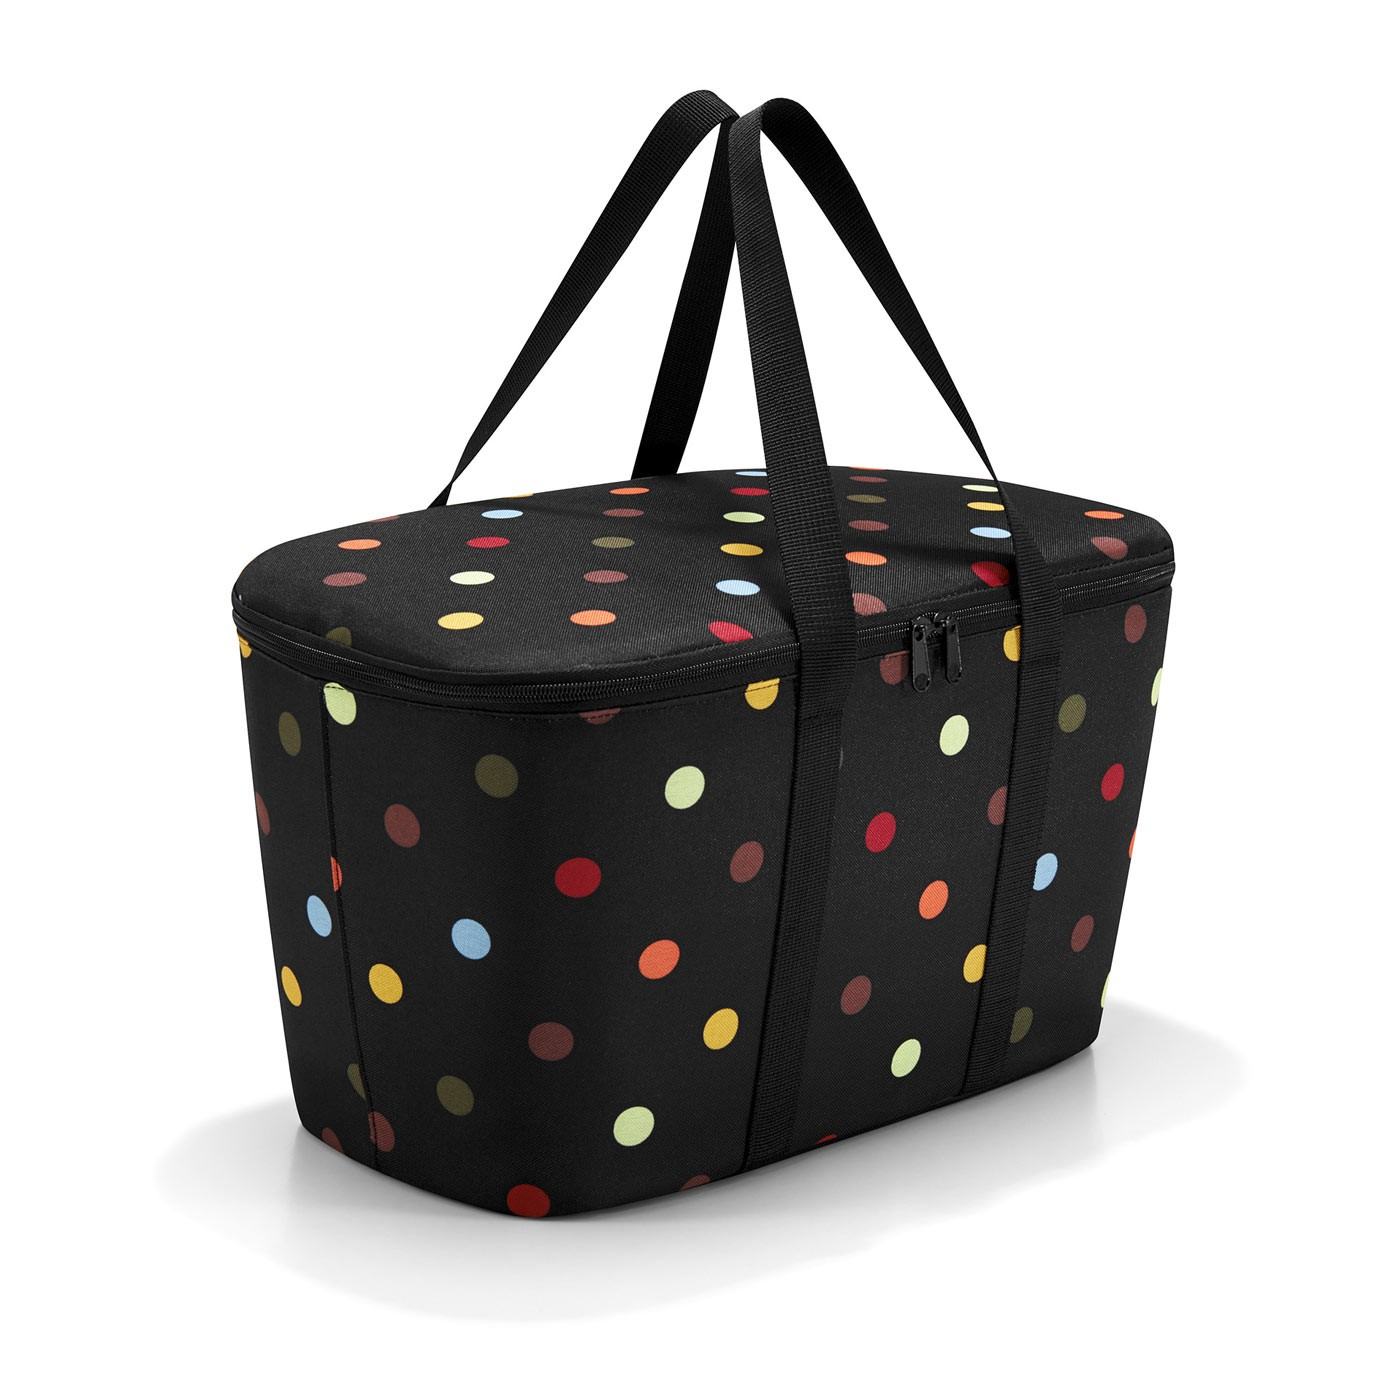 Chladící taška Reisenthel Coolerbag Dots